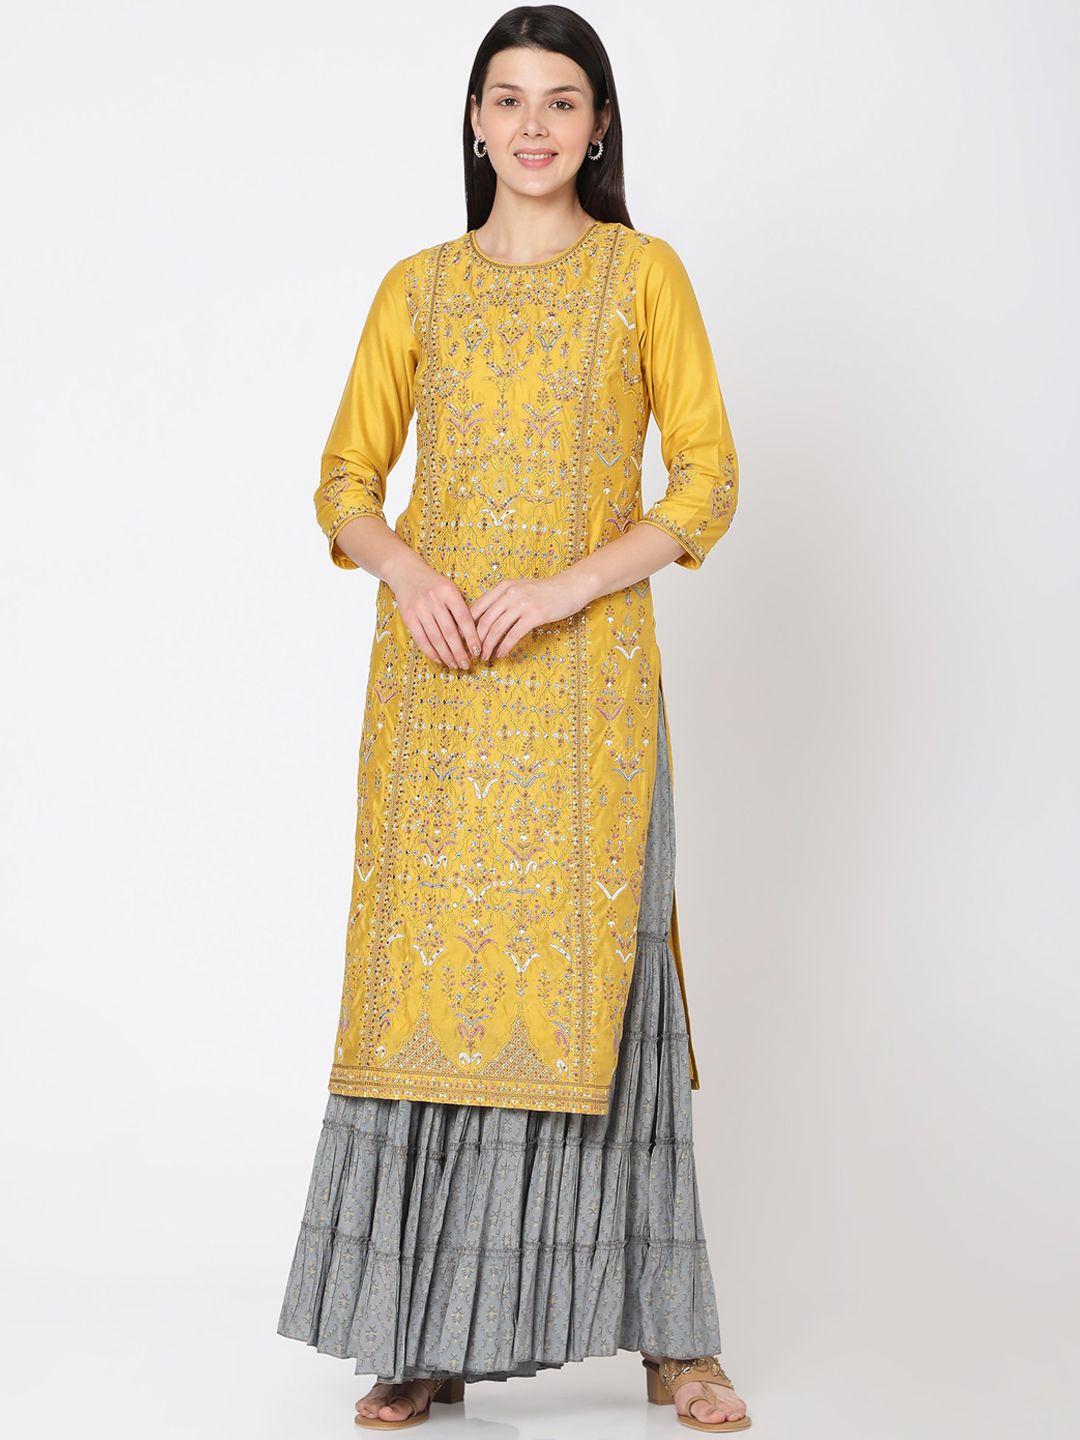 ojas designs women yellow floral printed regular chanderi silk kurti with sharara